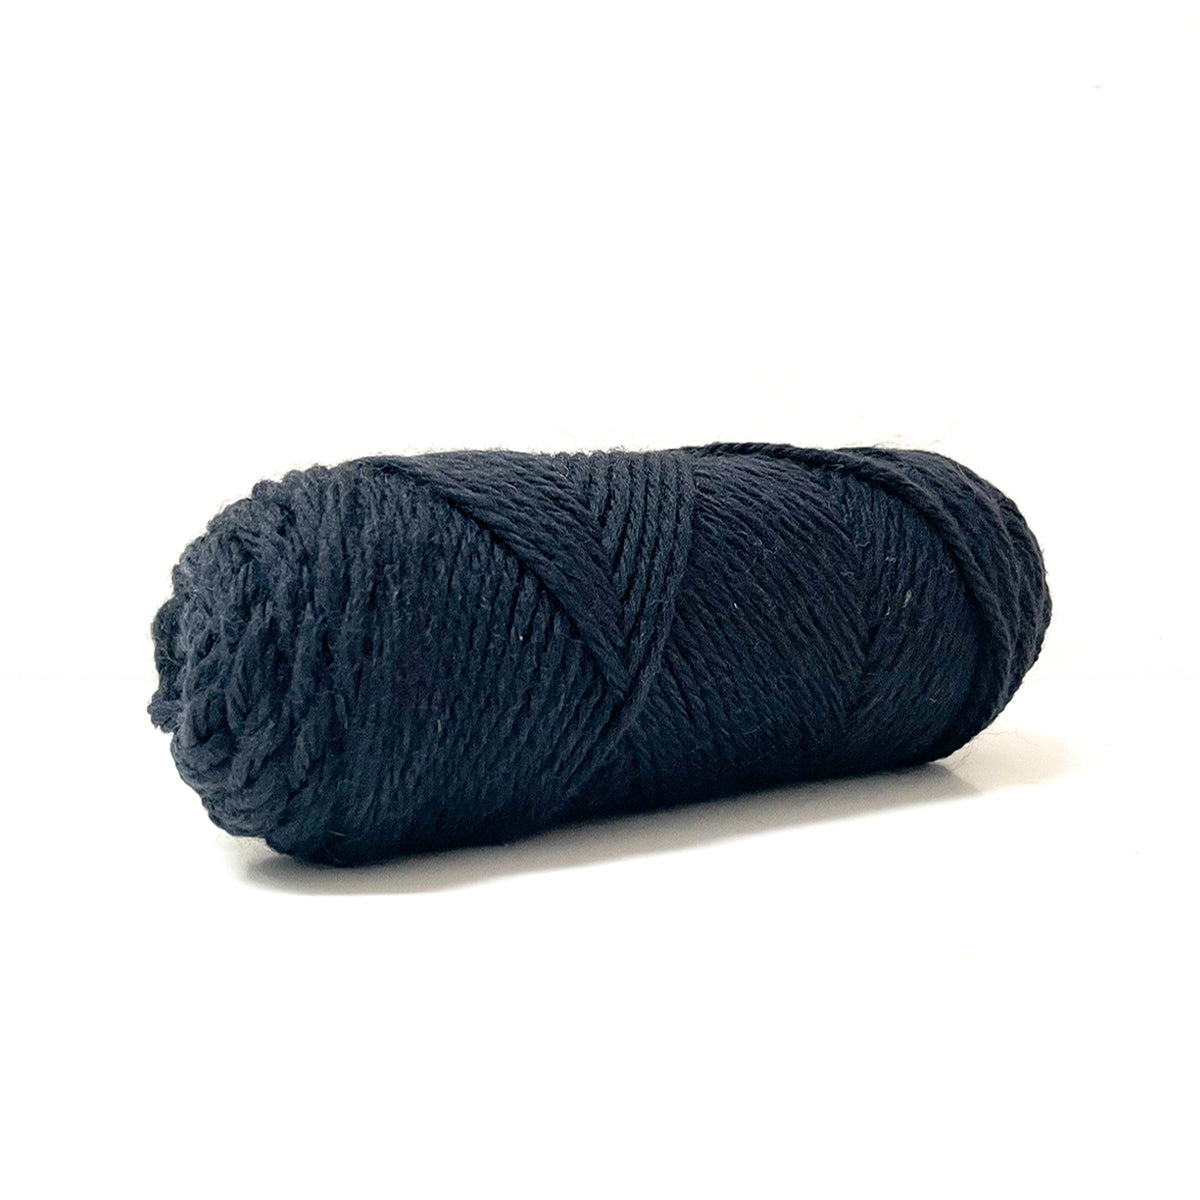 Natural Oxford Grey Gray 100% Wool Worsted Weight Yarn